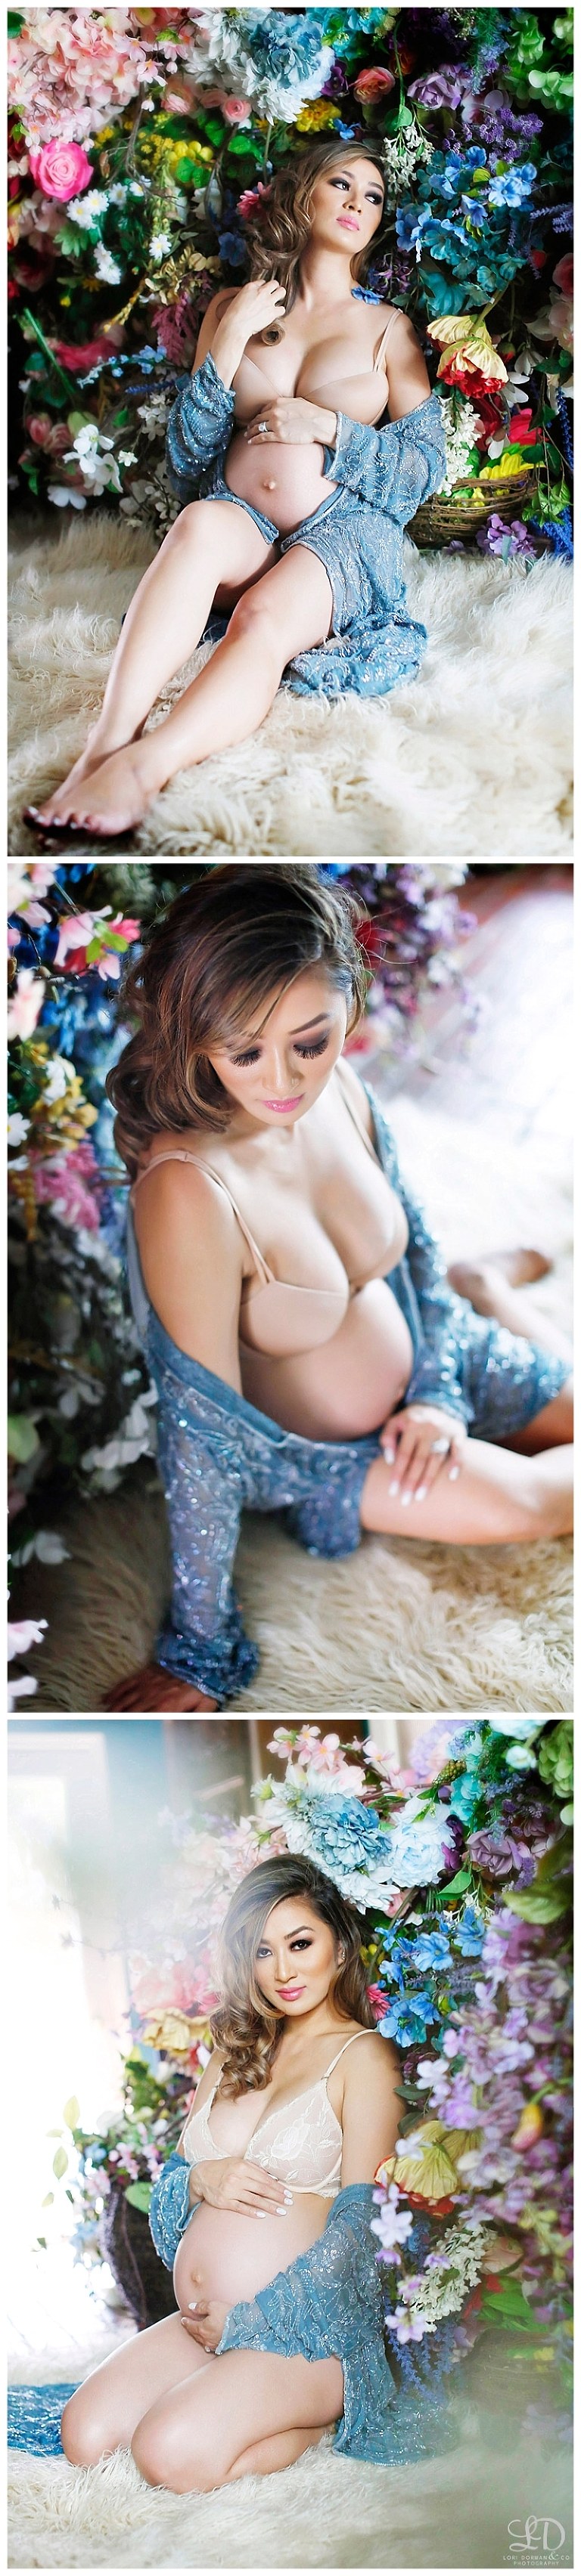 fantasy maternity photoshoot-magical maternity photoshoot-lori dorman photography_0367.jpg